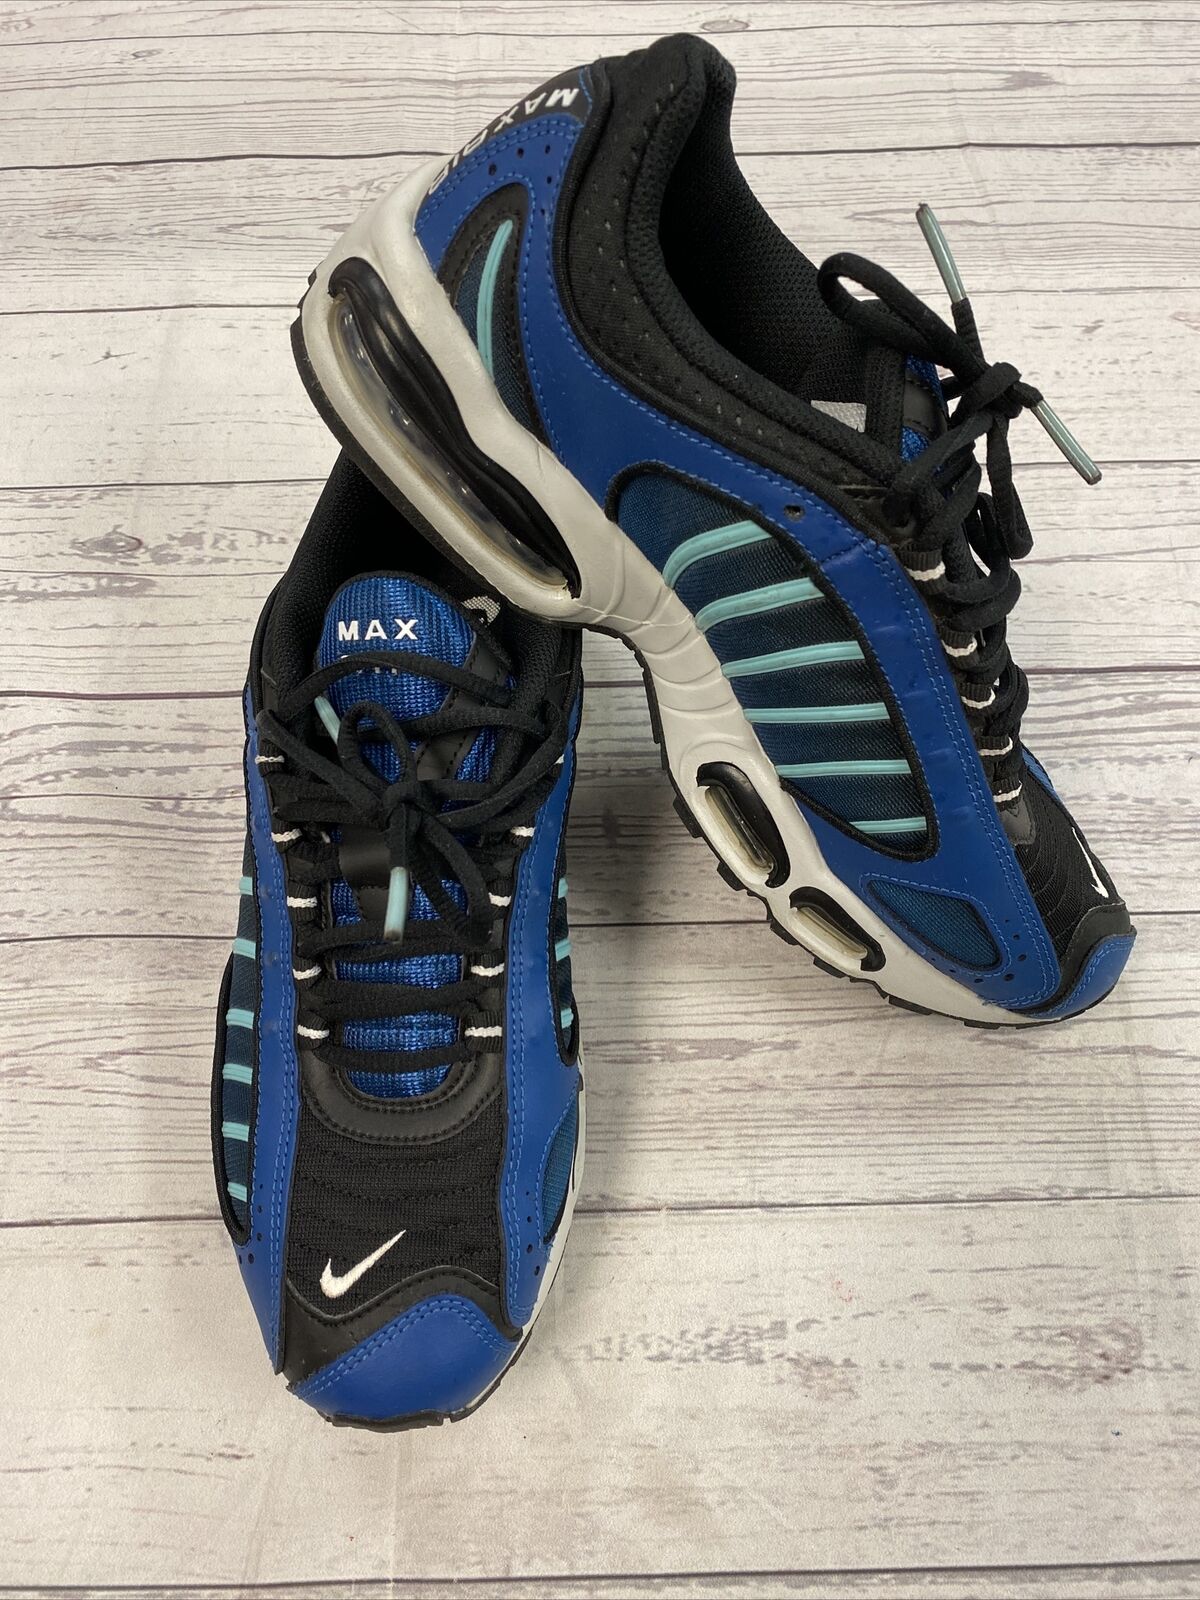 Nike CD0456-400 Tailwind 4 Industrial Blue Mens Size 9.5 beyond exchange